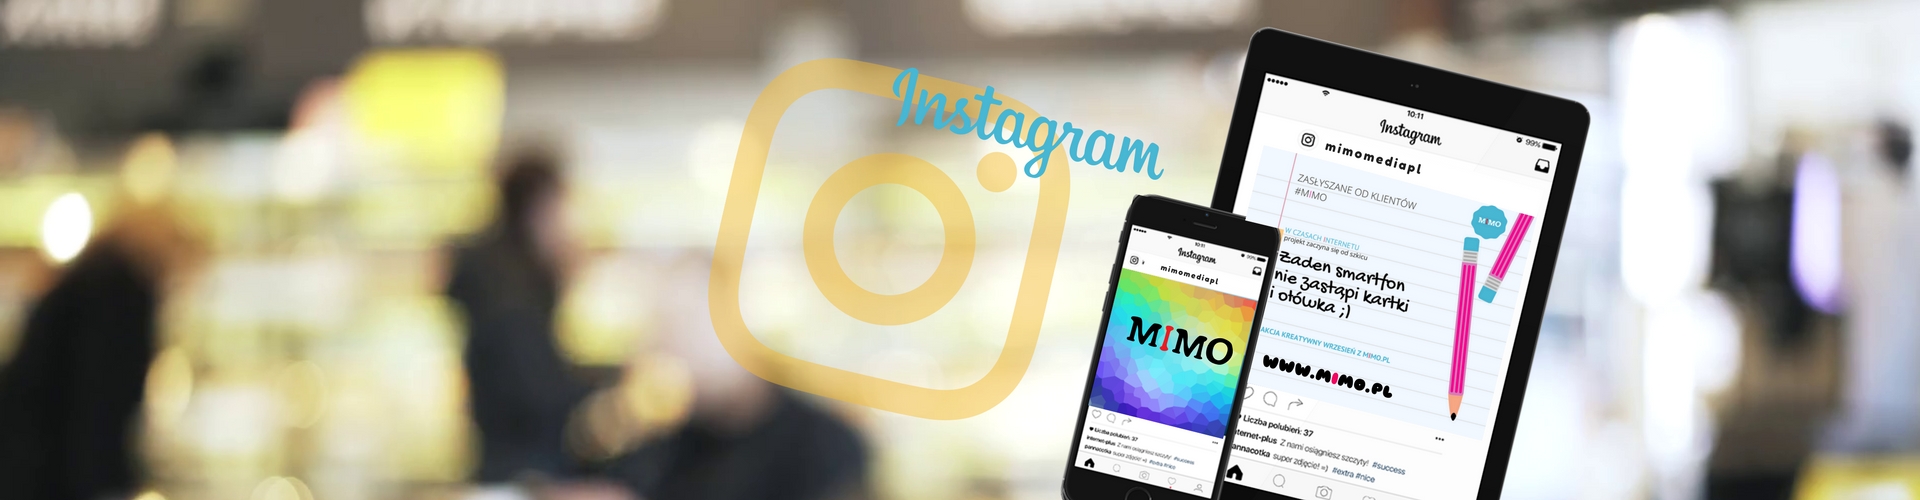 Obsługa social media agencja interaktywna Instagram Facebook